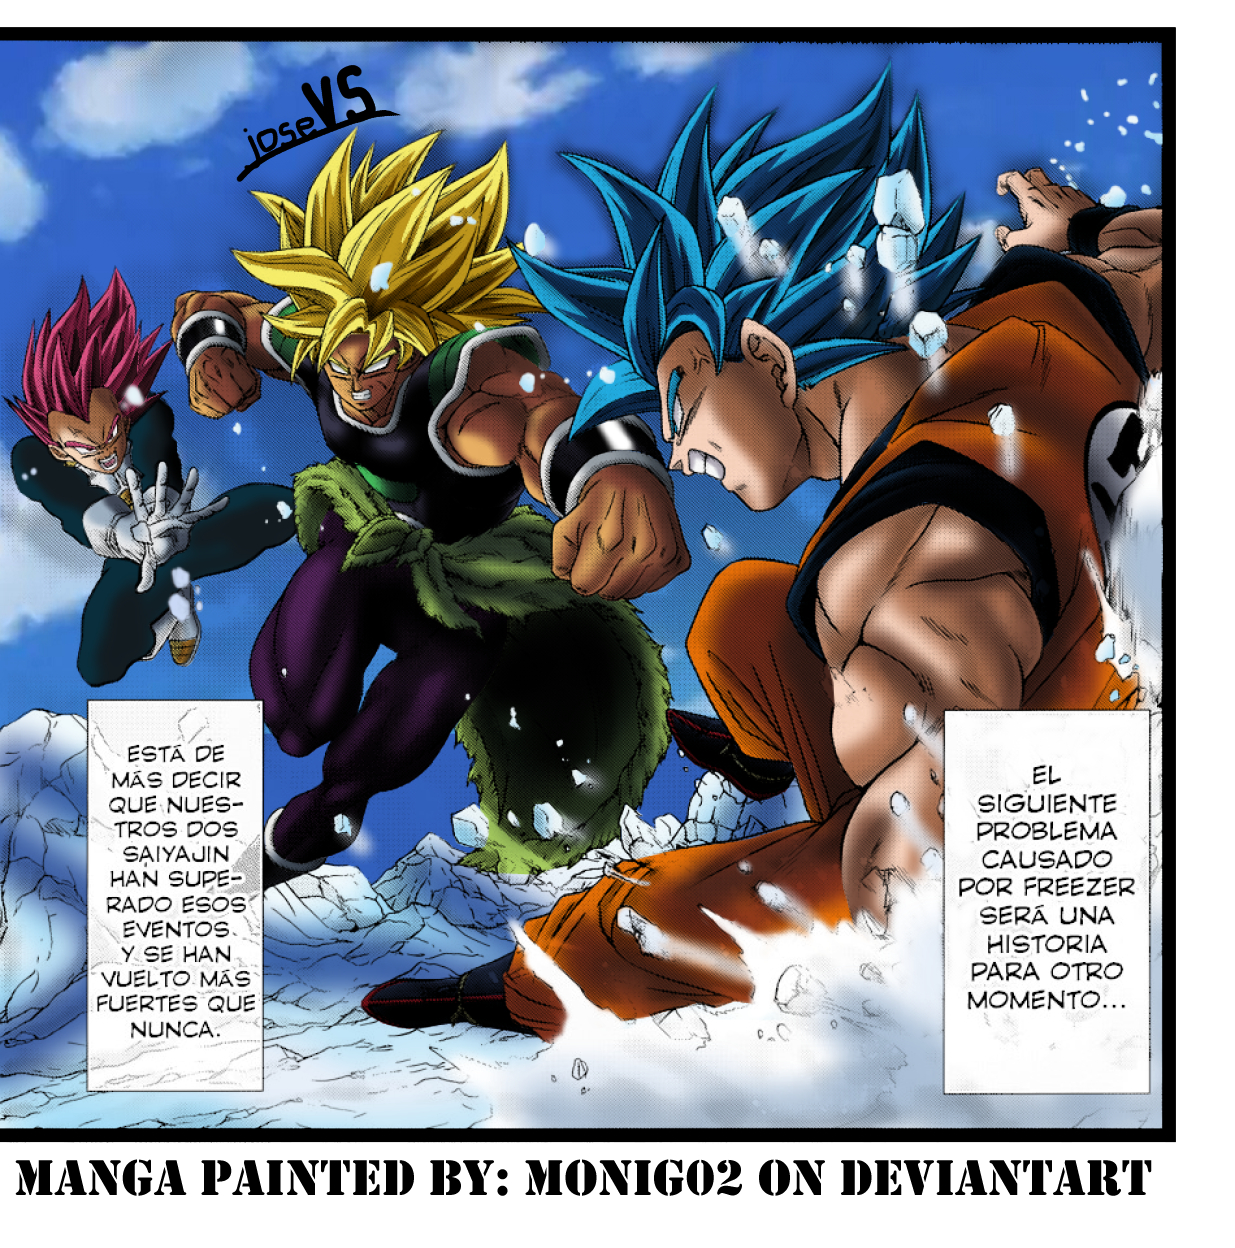 Broly vs Goku and Vegeta DBS manga 42 by MoniG02 by MoniG02 on DeviantArt